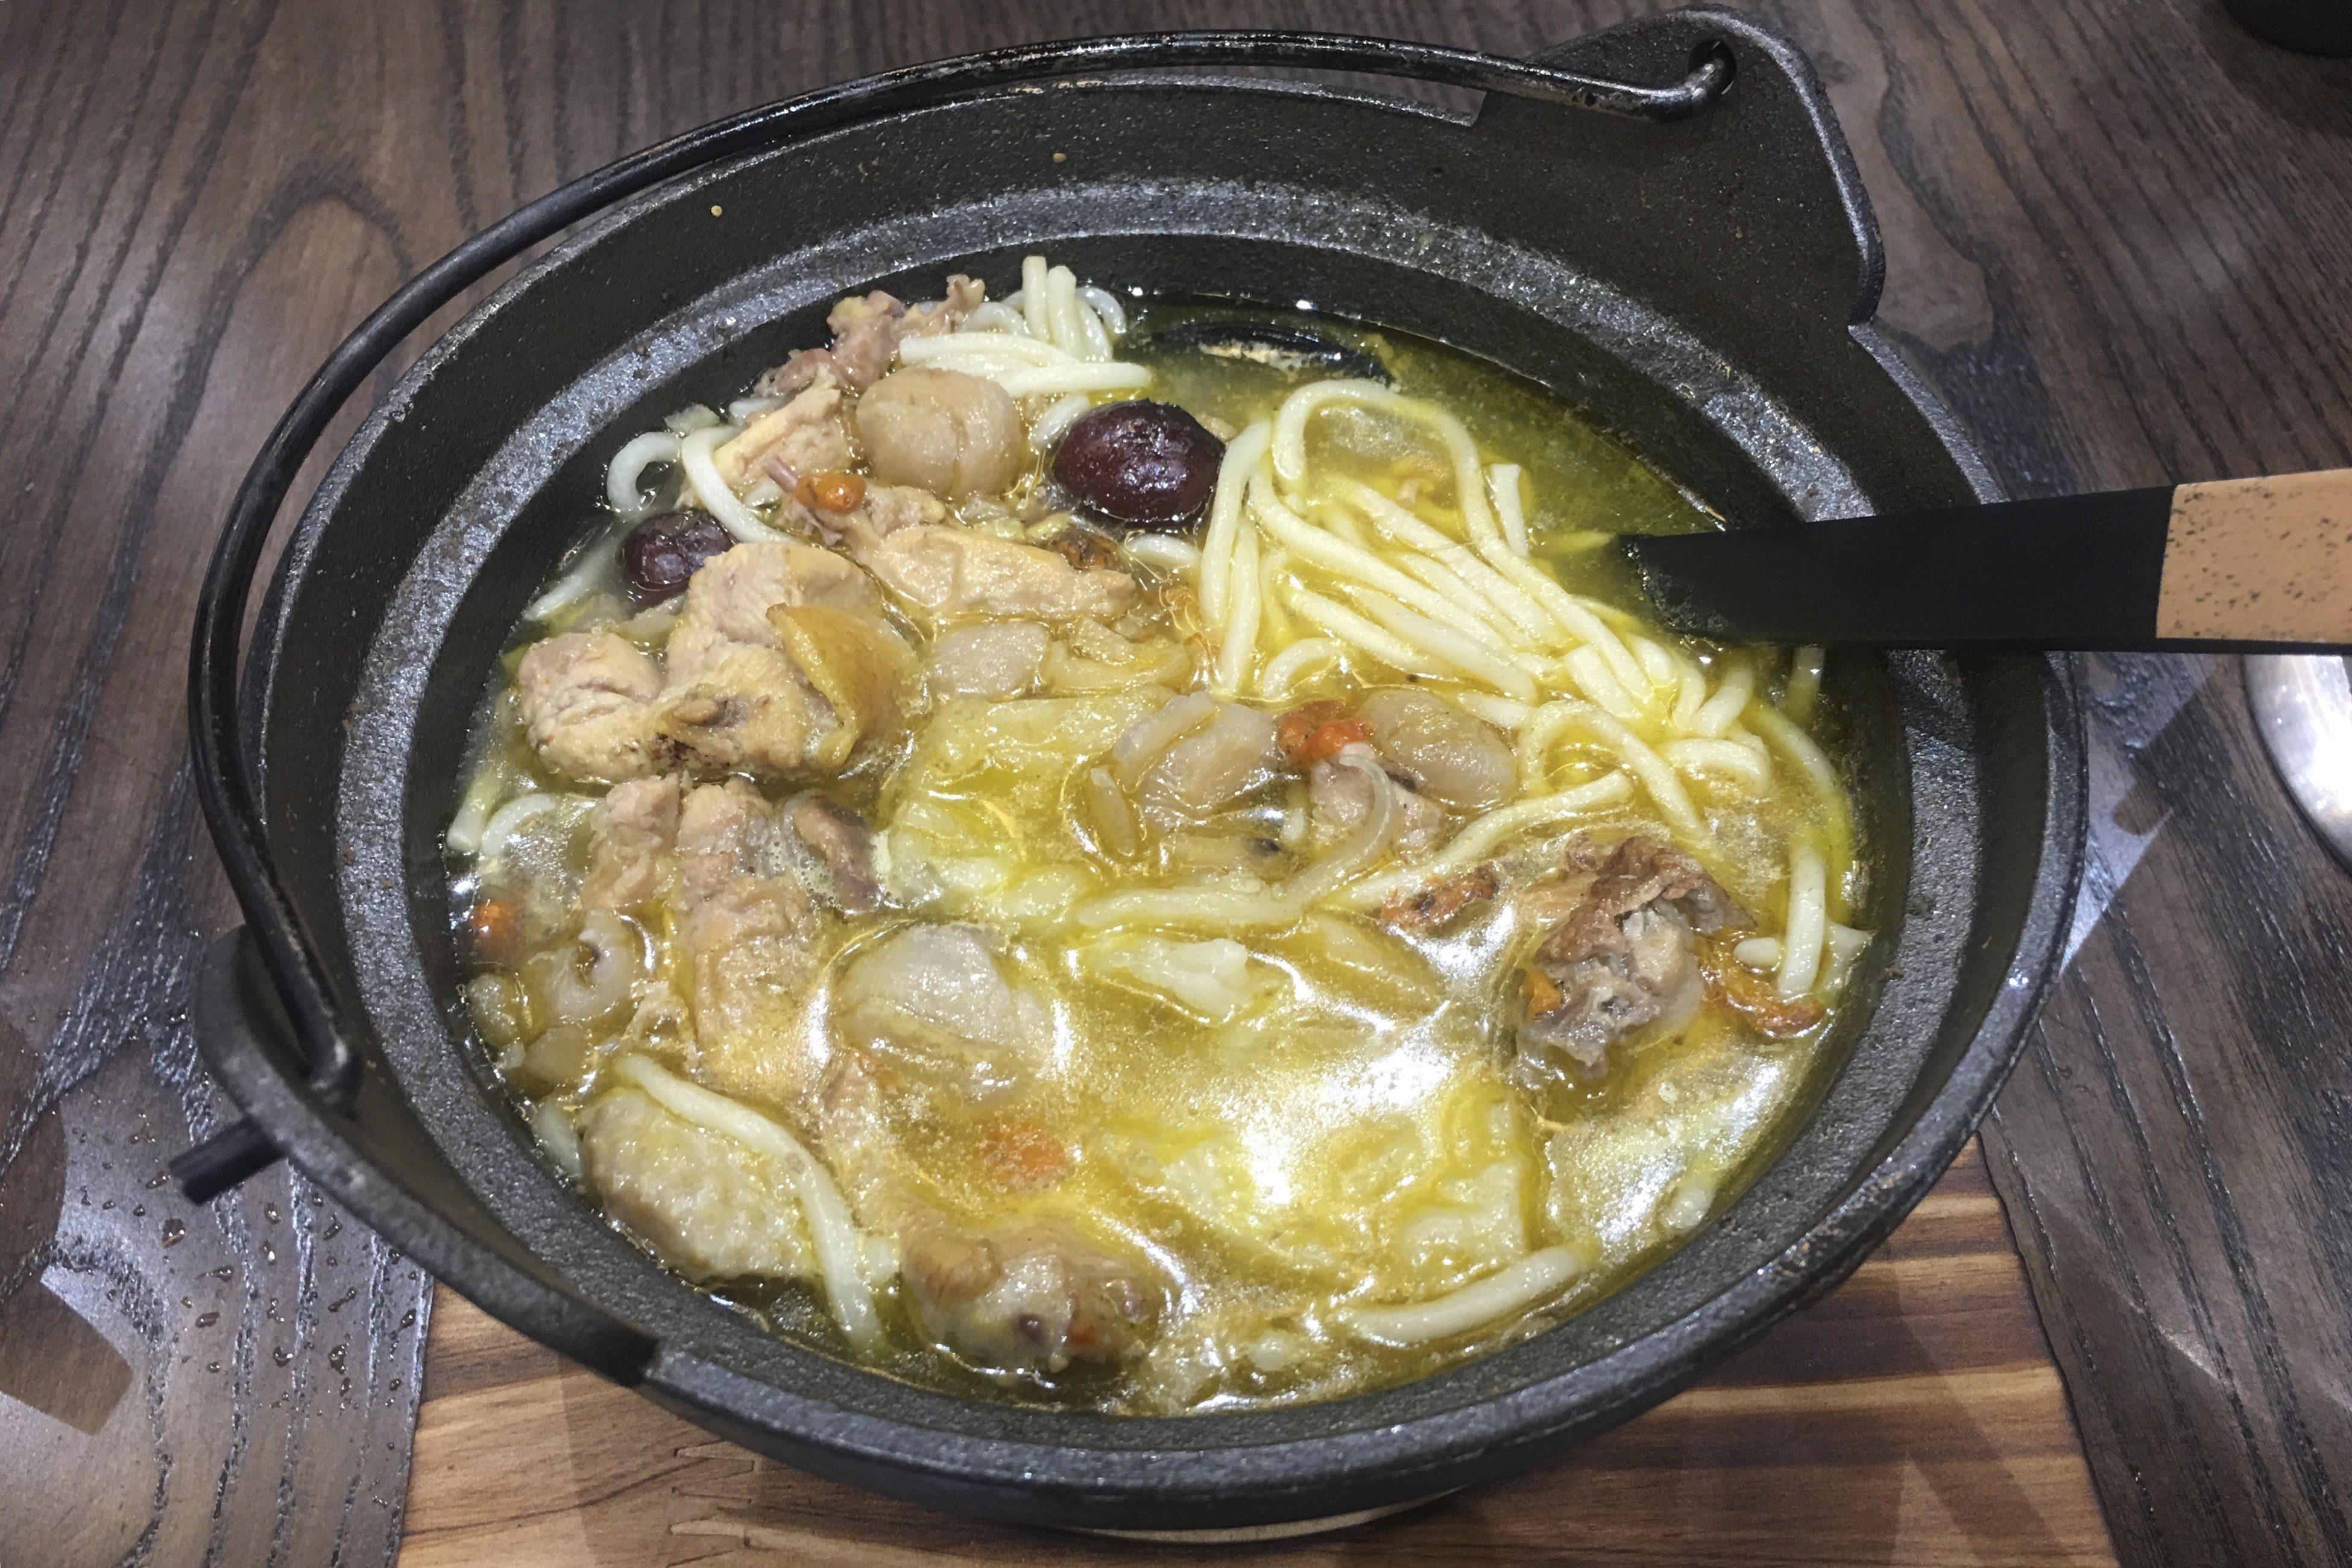 The fish maw chicken noodles dish at Wyji restaurant in Wan Chai, Hong Kong. Photo: Oasis Li